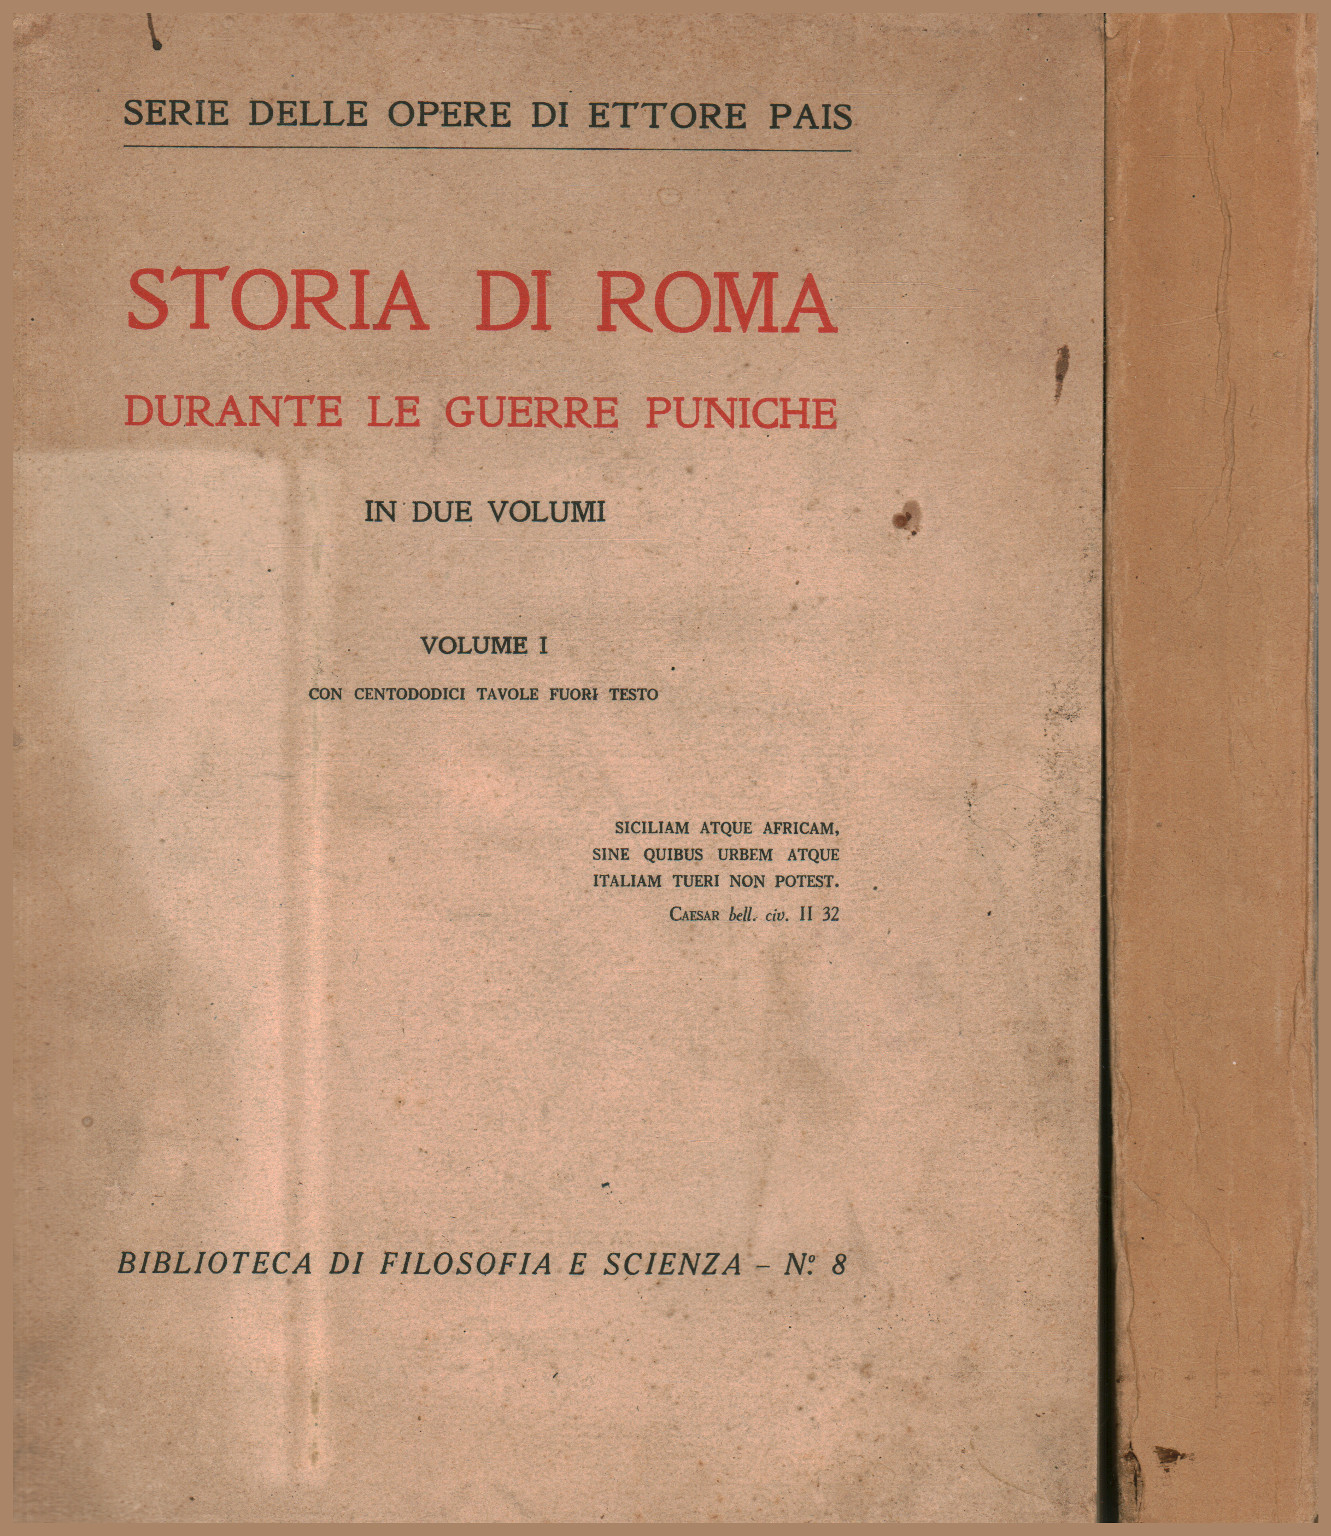 Historia de Roma (2 volúmenes), Ettore Pais